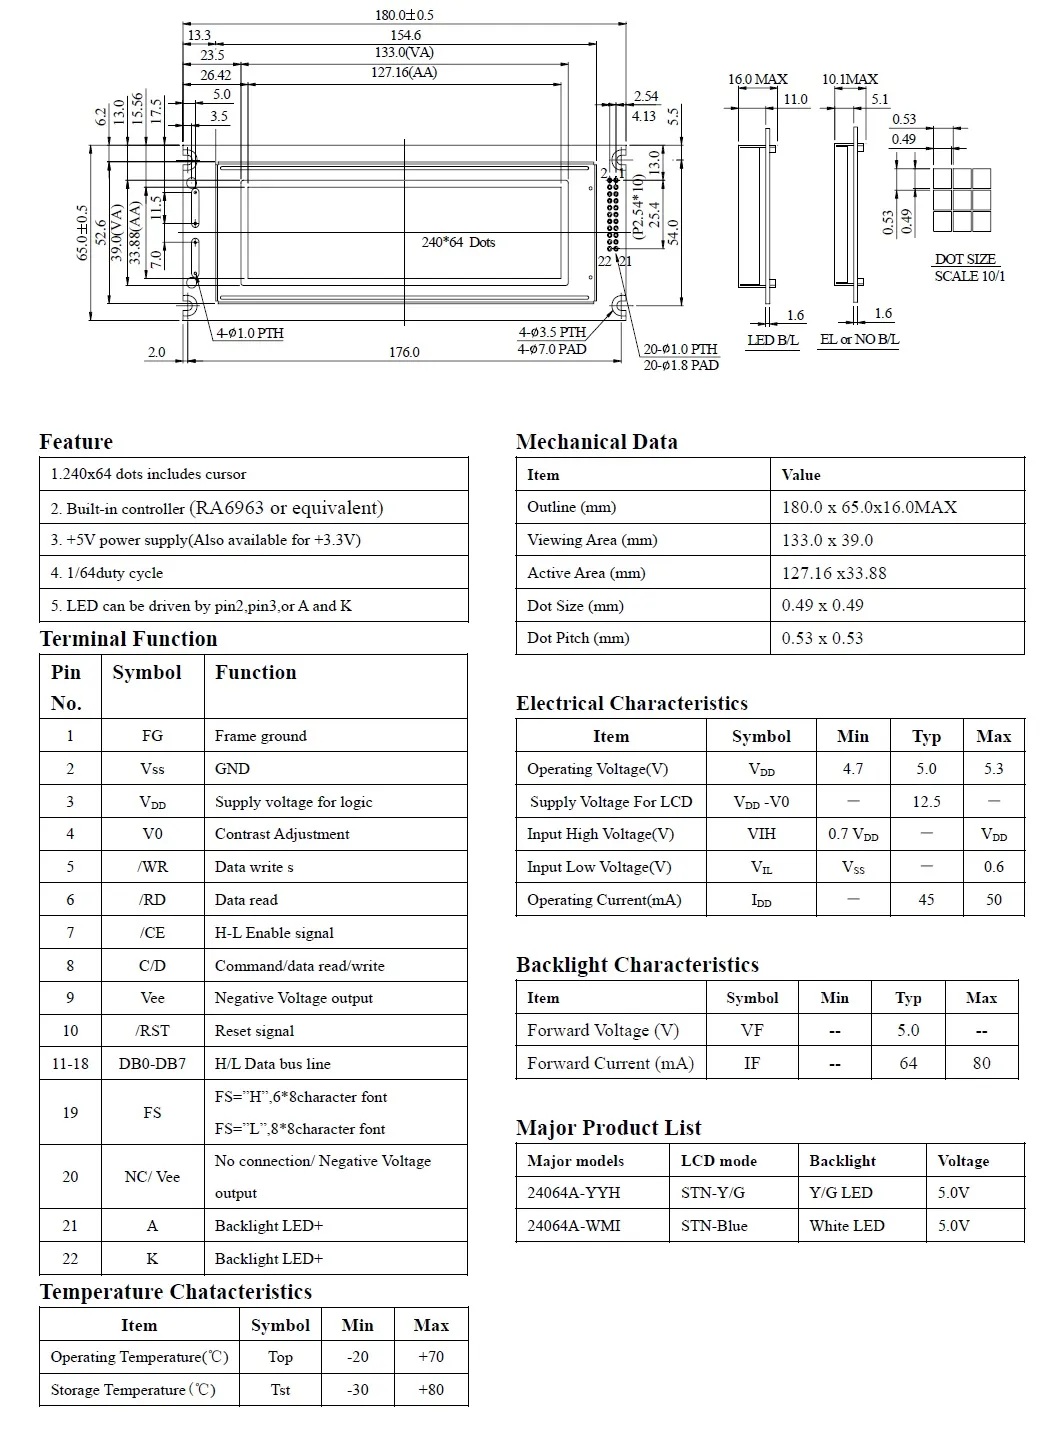 240x64 Graphic LCD Arduino Display Module datasheet